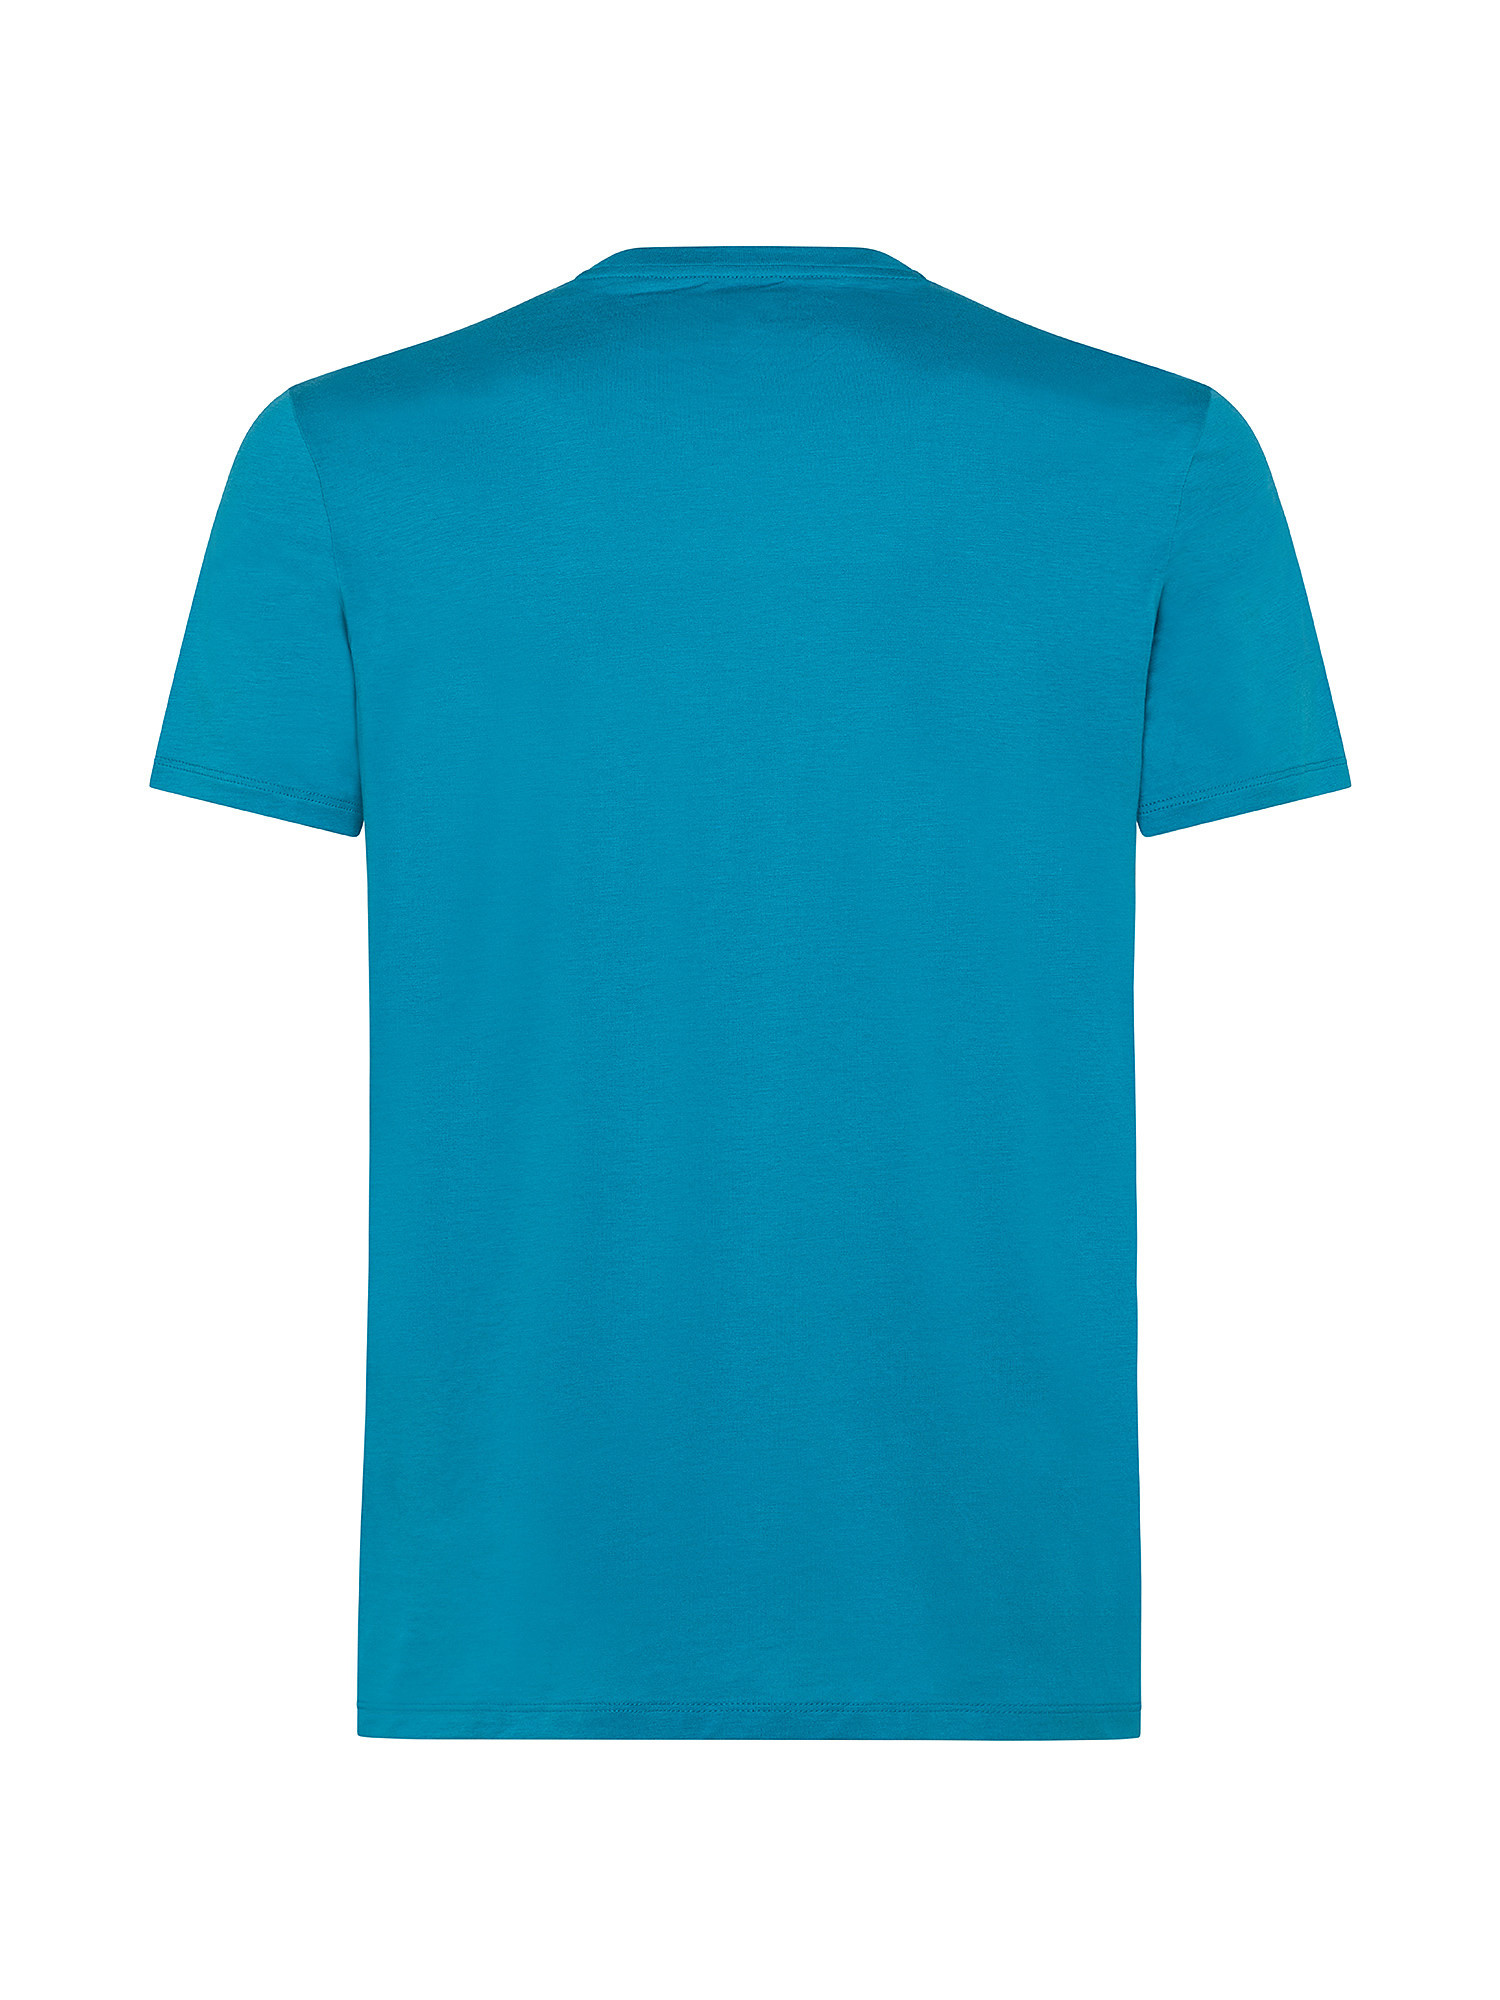 T-shirt, Turquoise, large image number 1